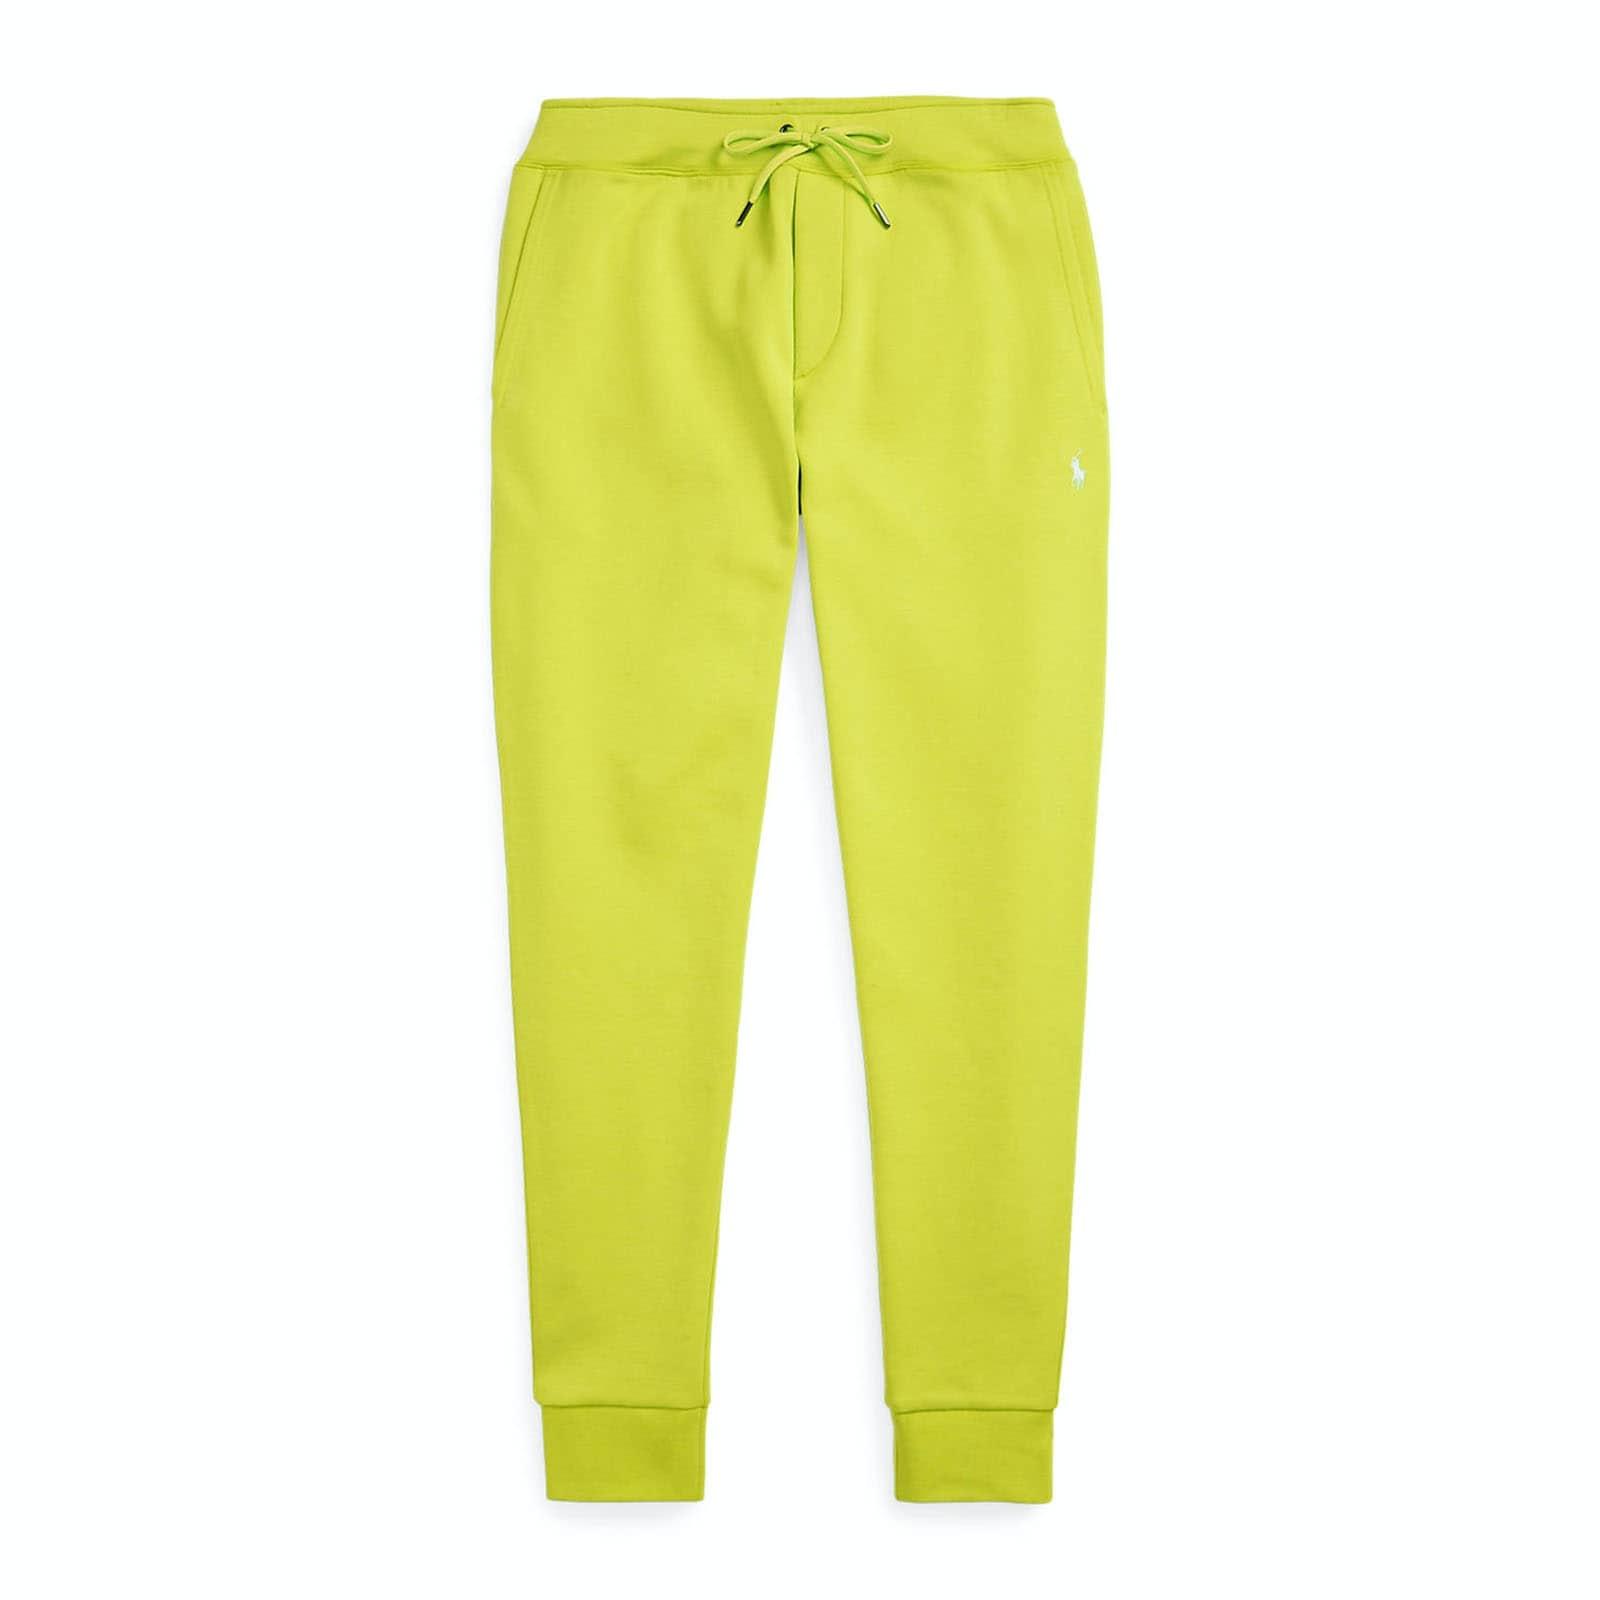 men yellow double-knit jogger pant